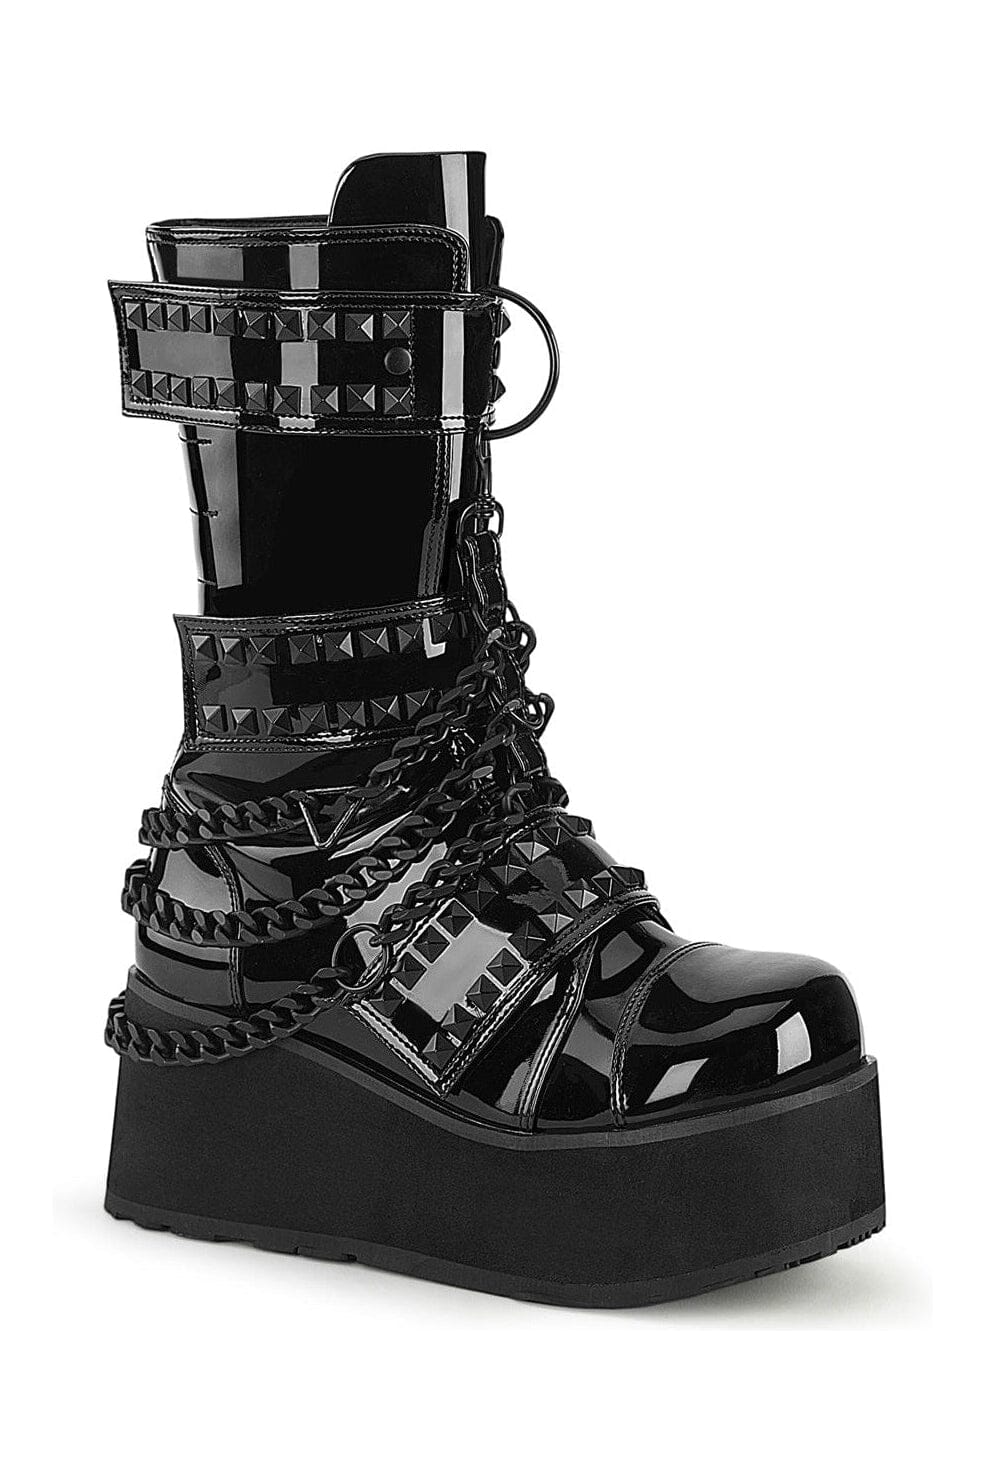 TRASHVILLE-138 Black Patent Knee Boot-Knee Boots-Demonia-Black-10-Patent-SEXYSHOES.COM